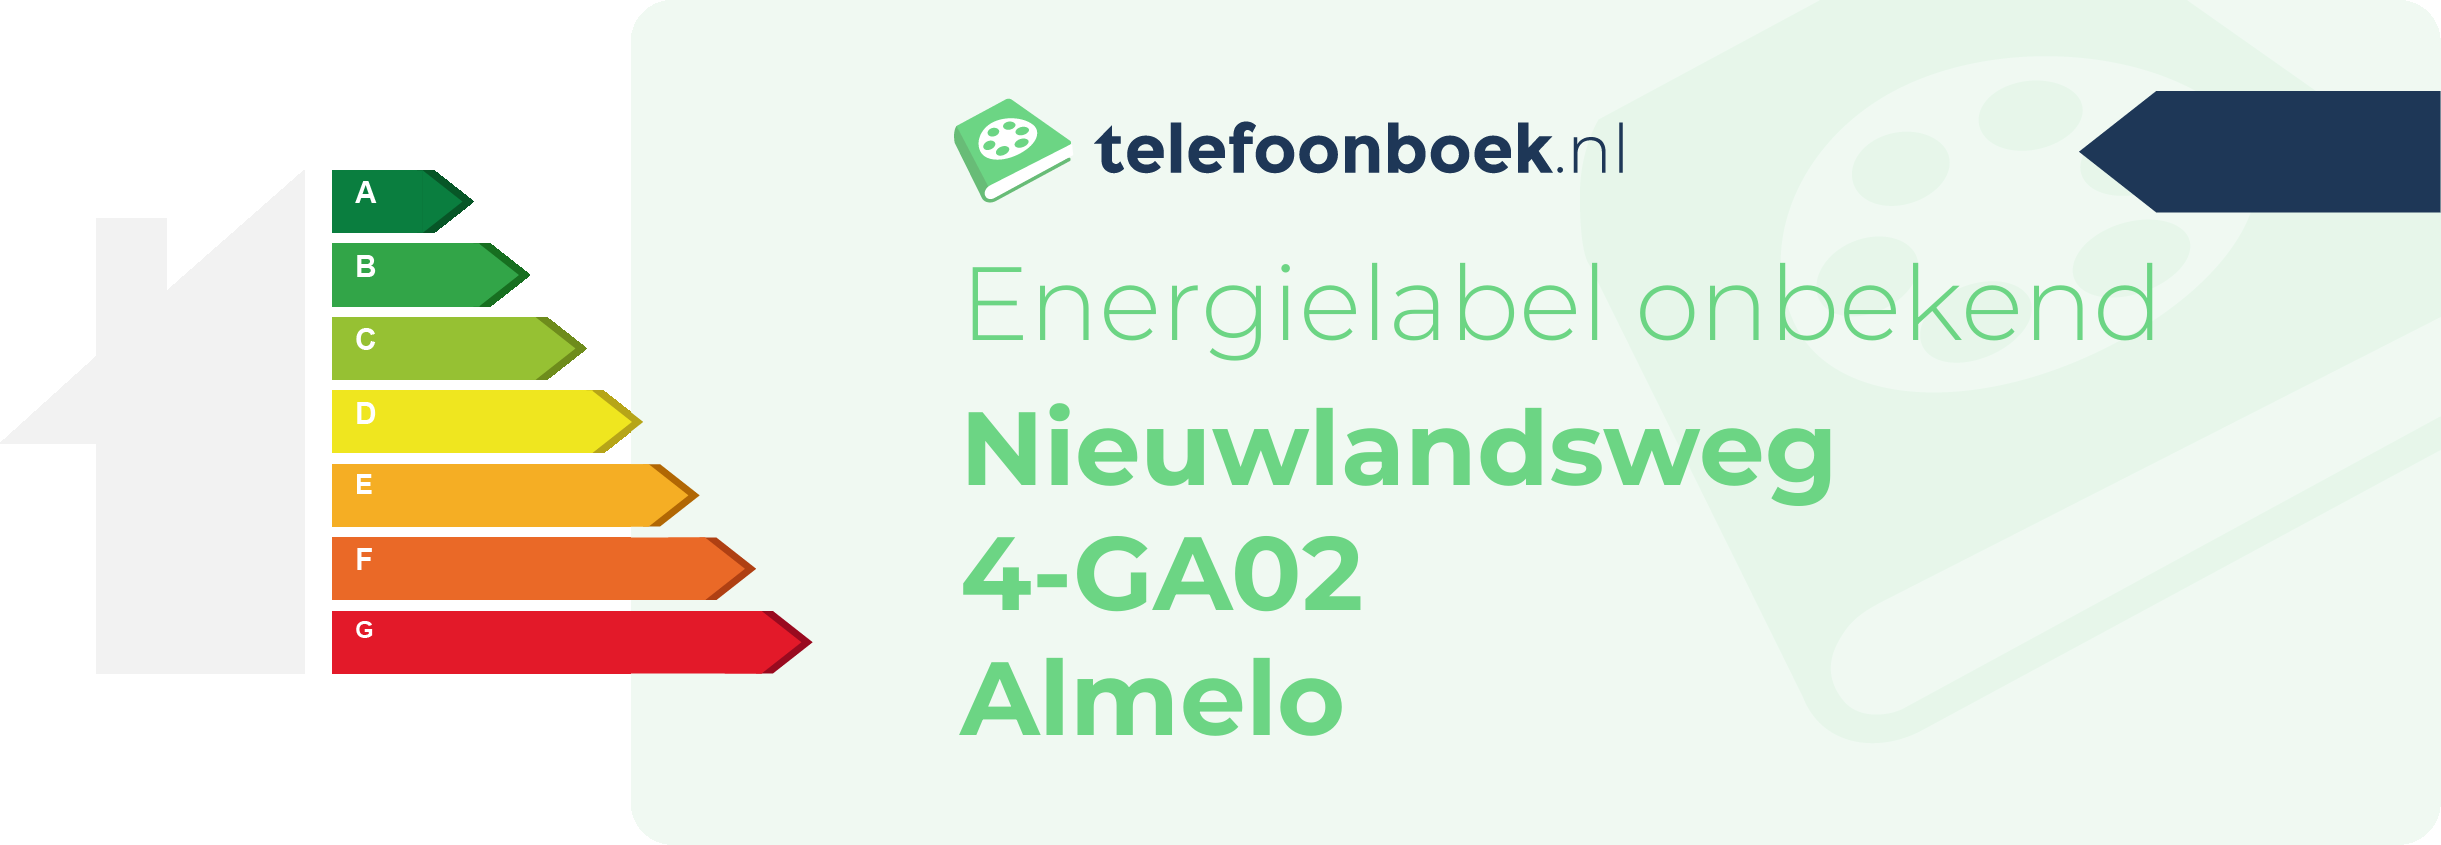 Energielabel Nieuwlandsweg 4-GA02 Almelo